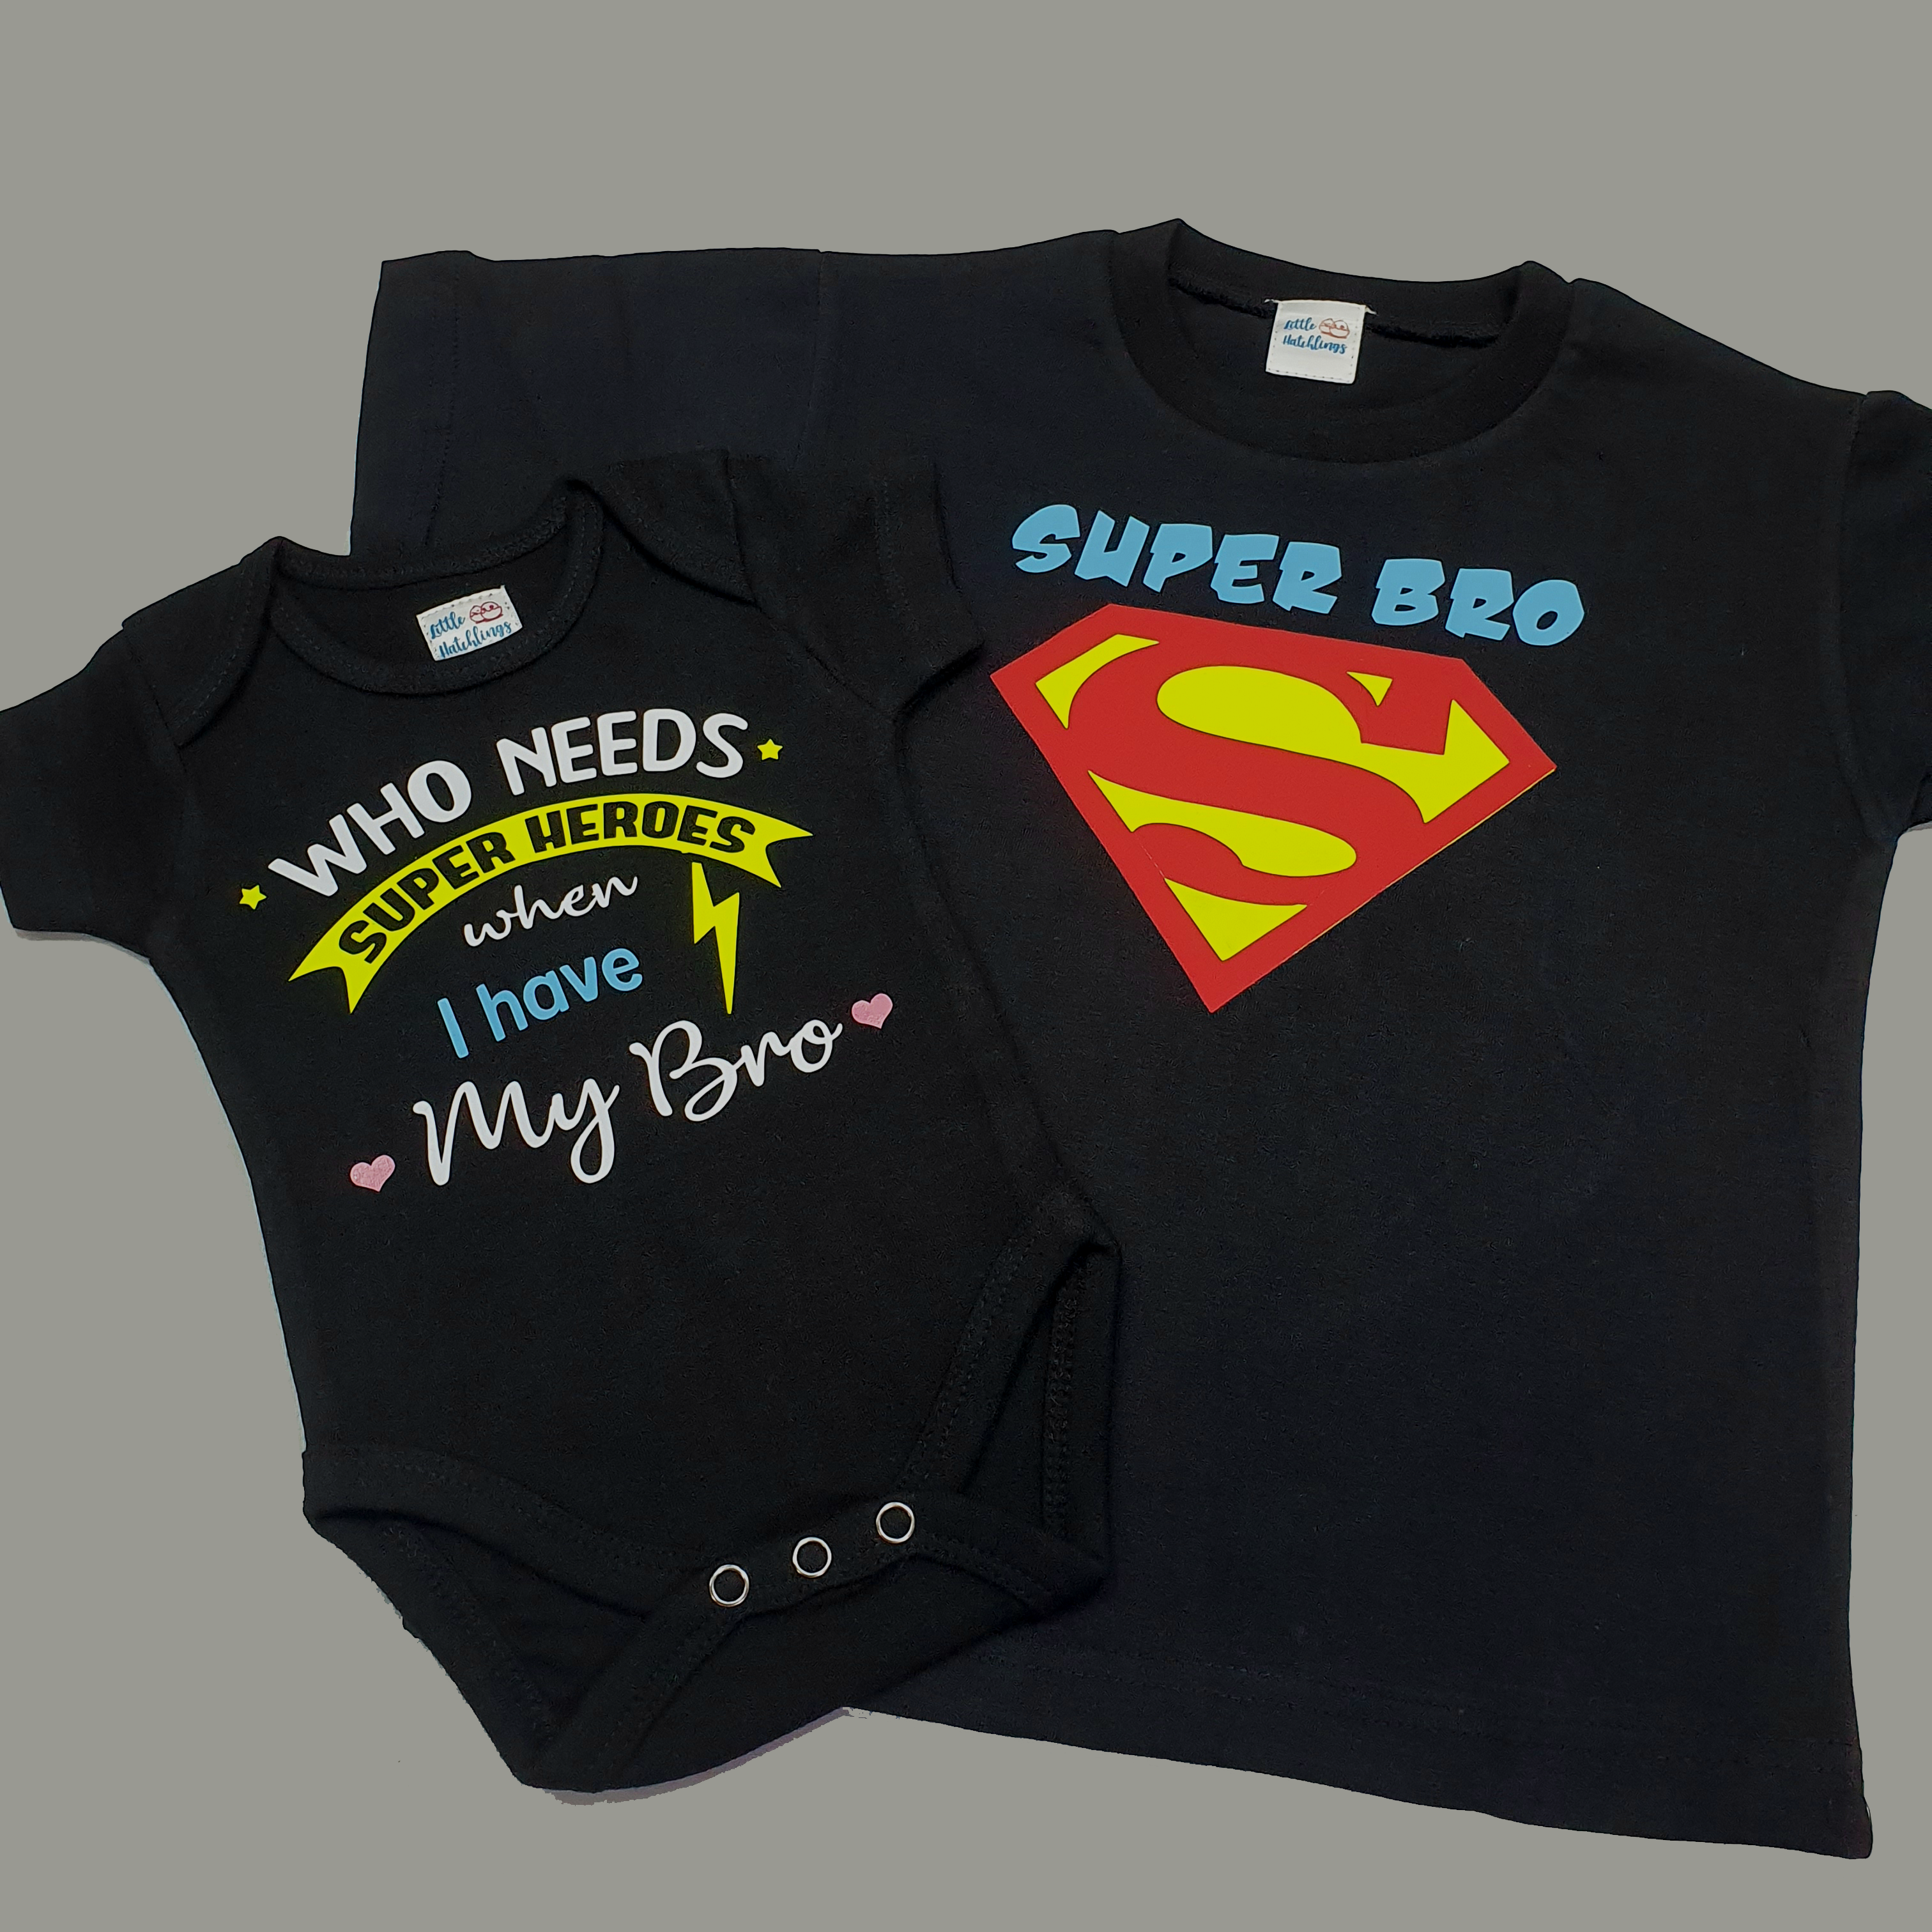 Who Needs Superheroes - Super Bro Black Onesie Tshirt Combo